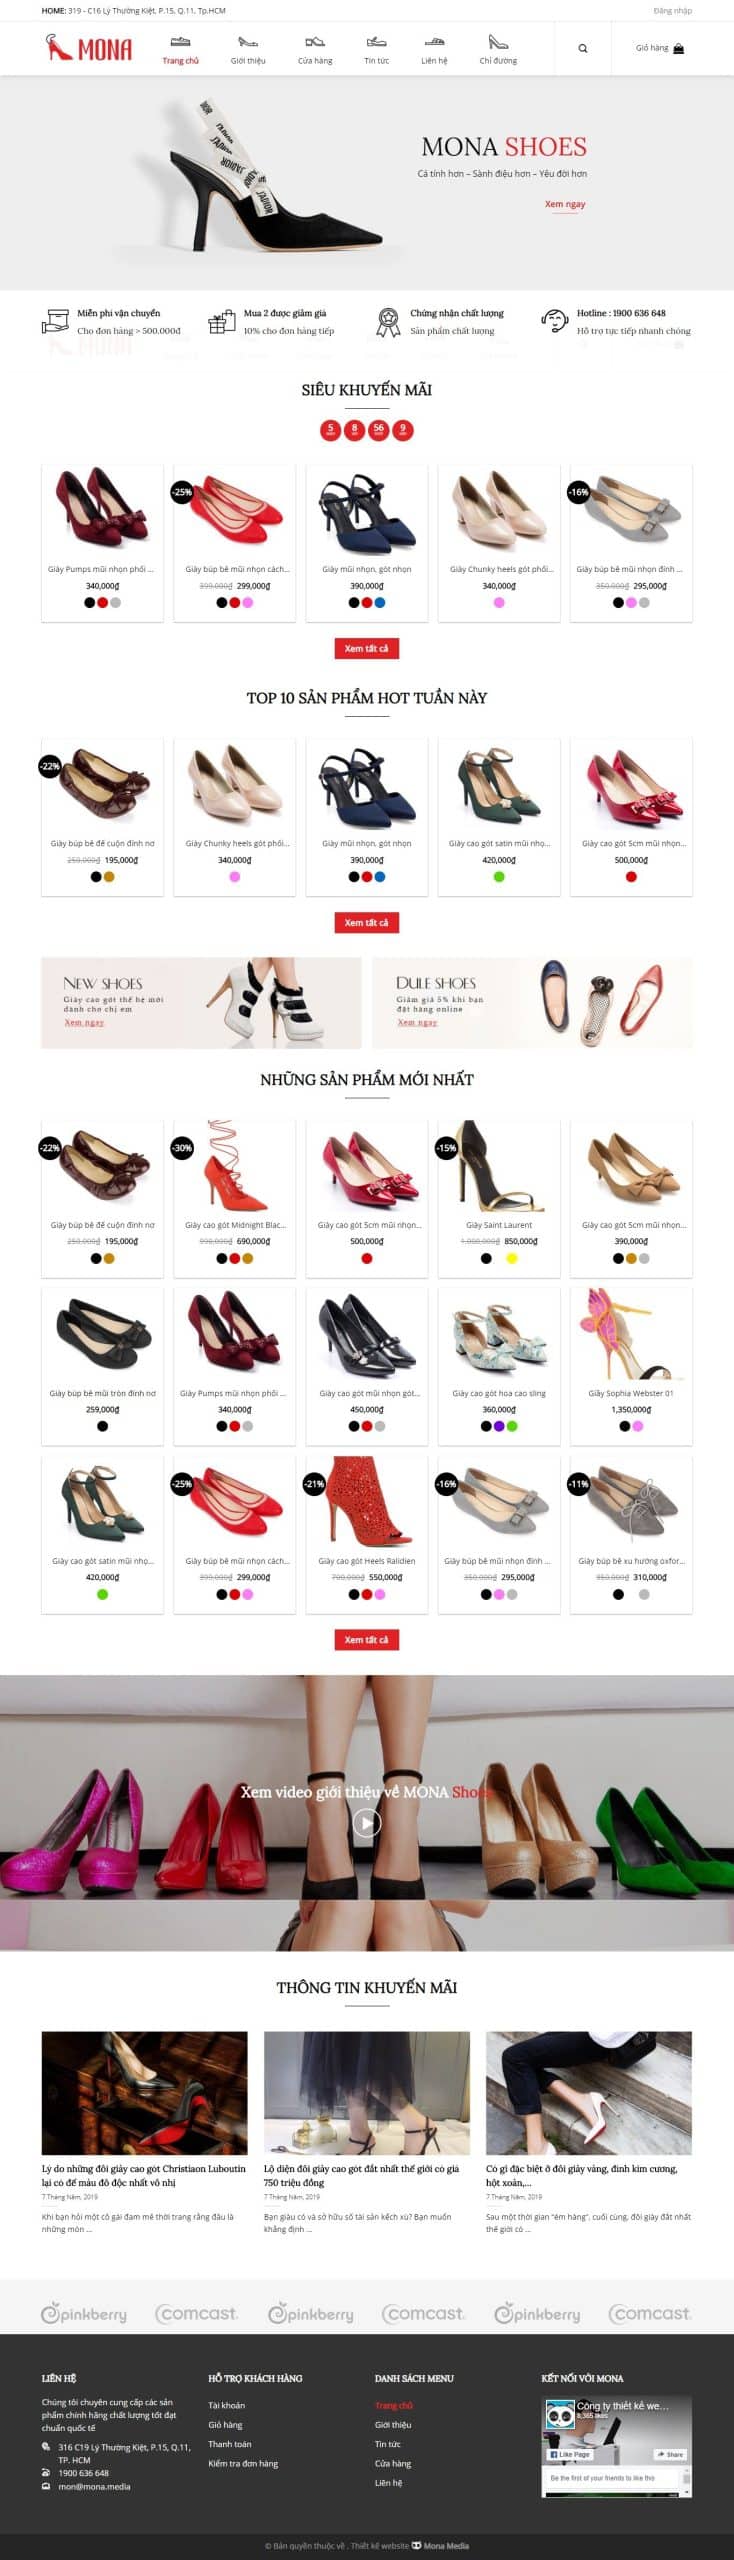 Mẫu giao diện website bán giày cao gót